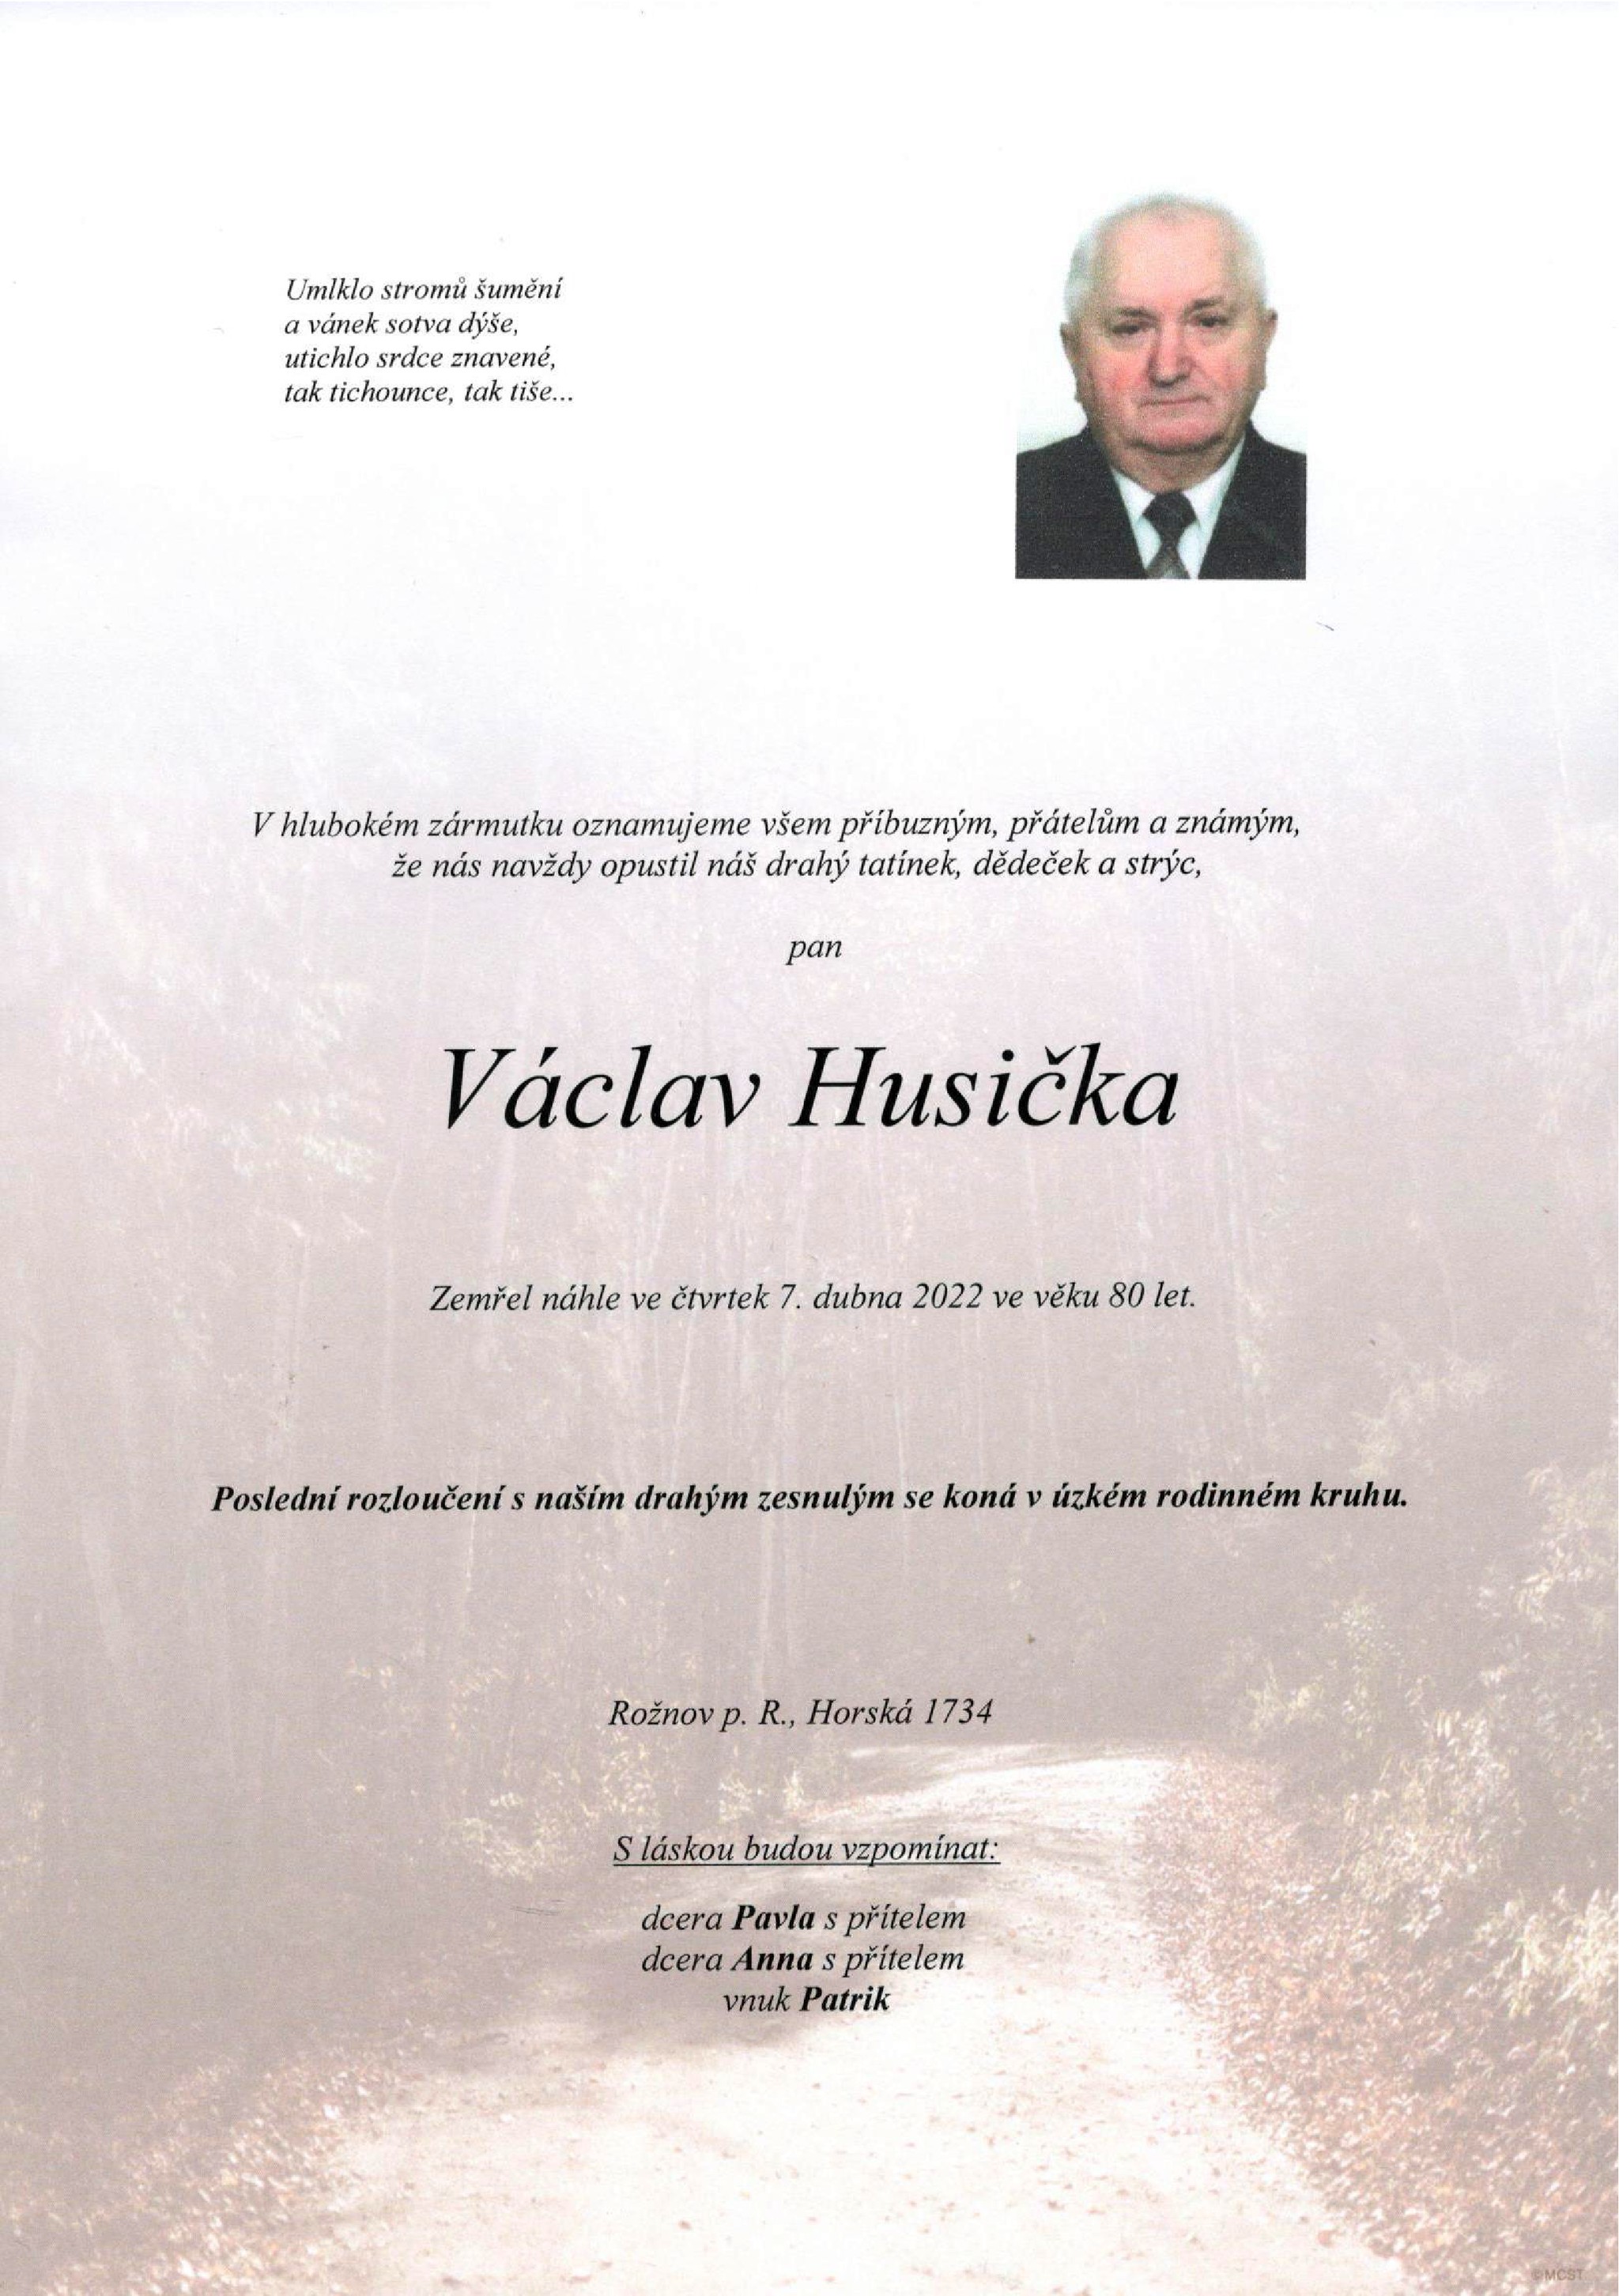 Václav Husička